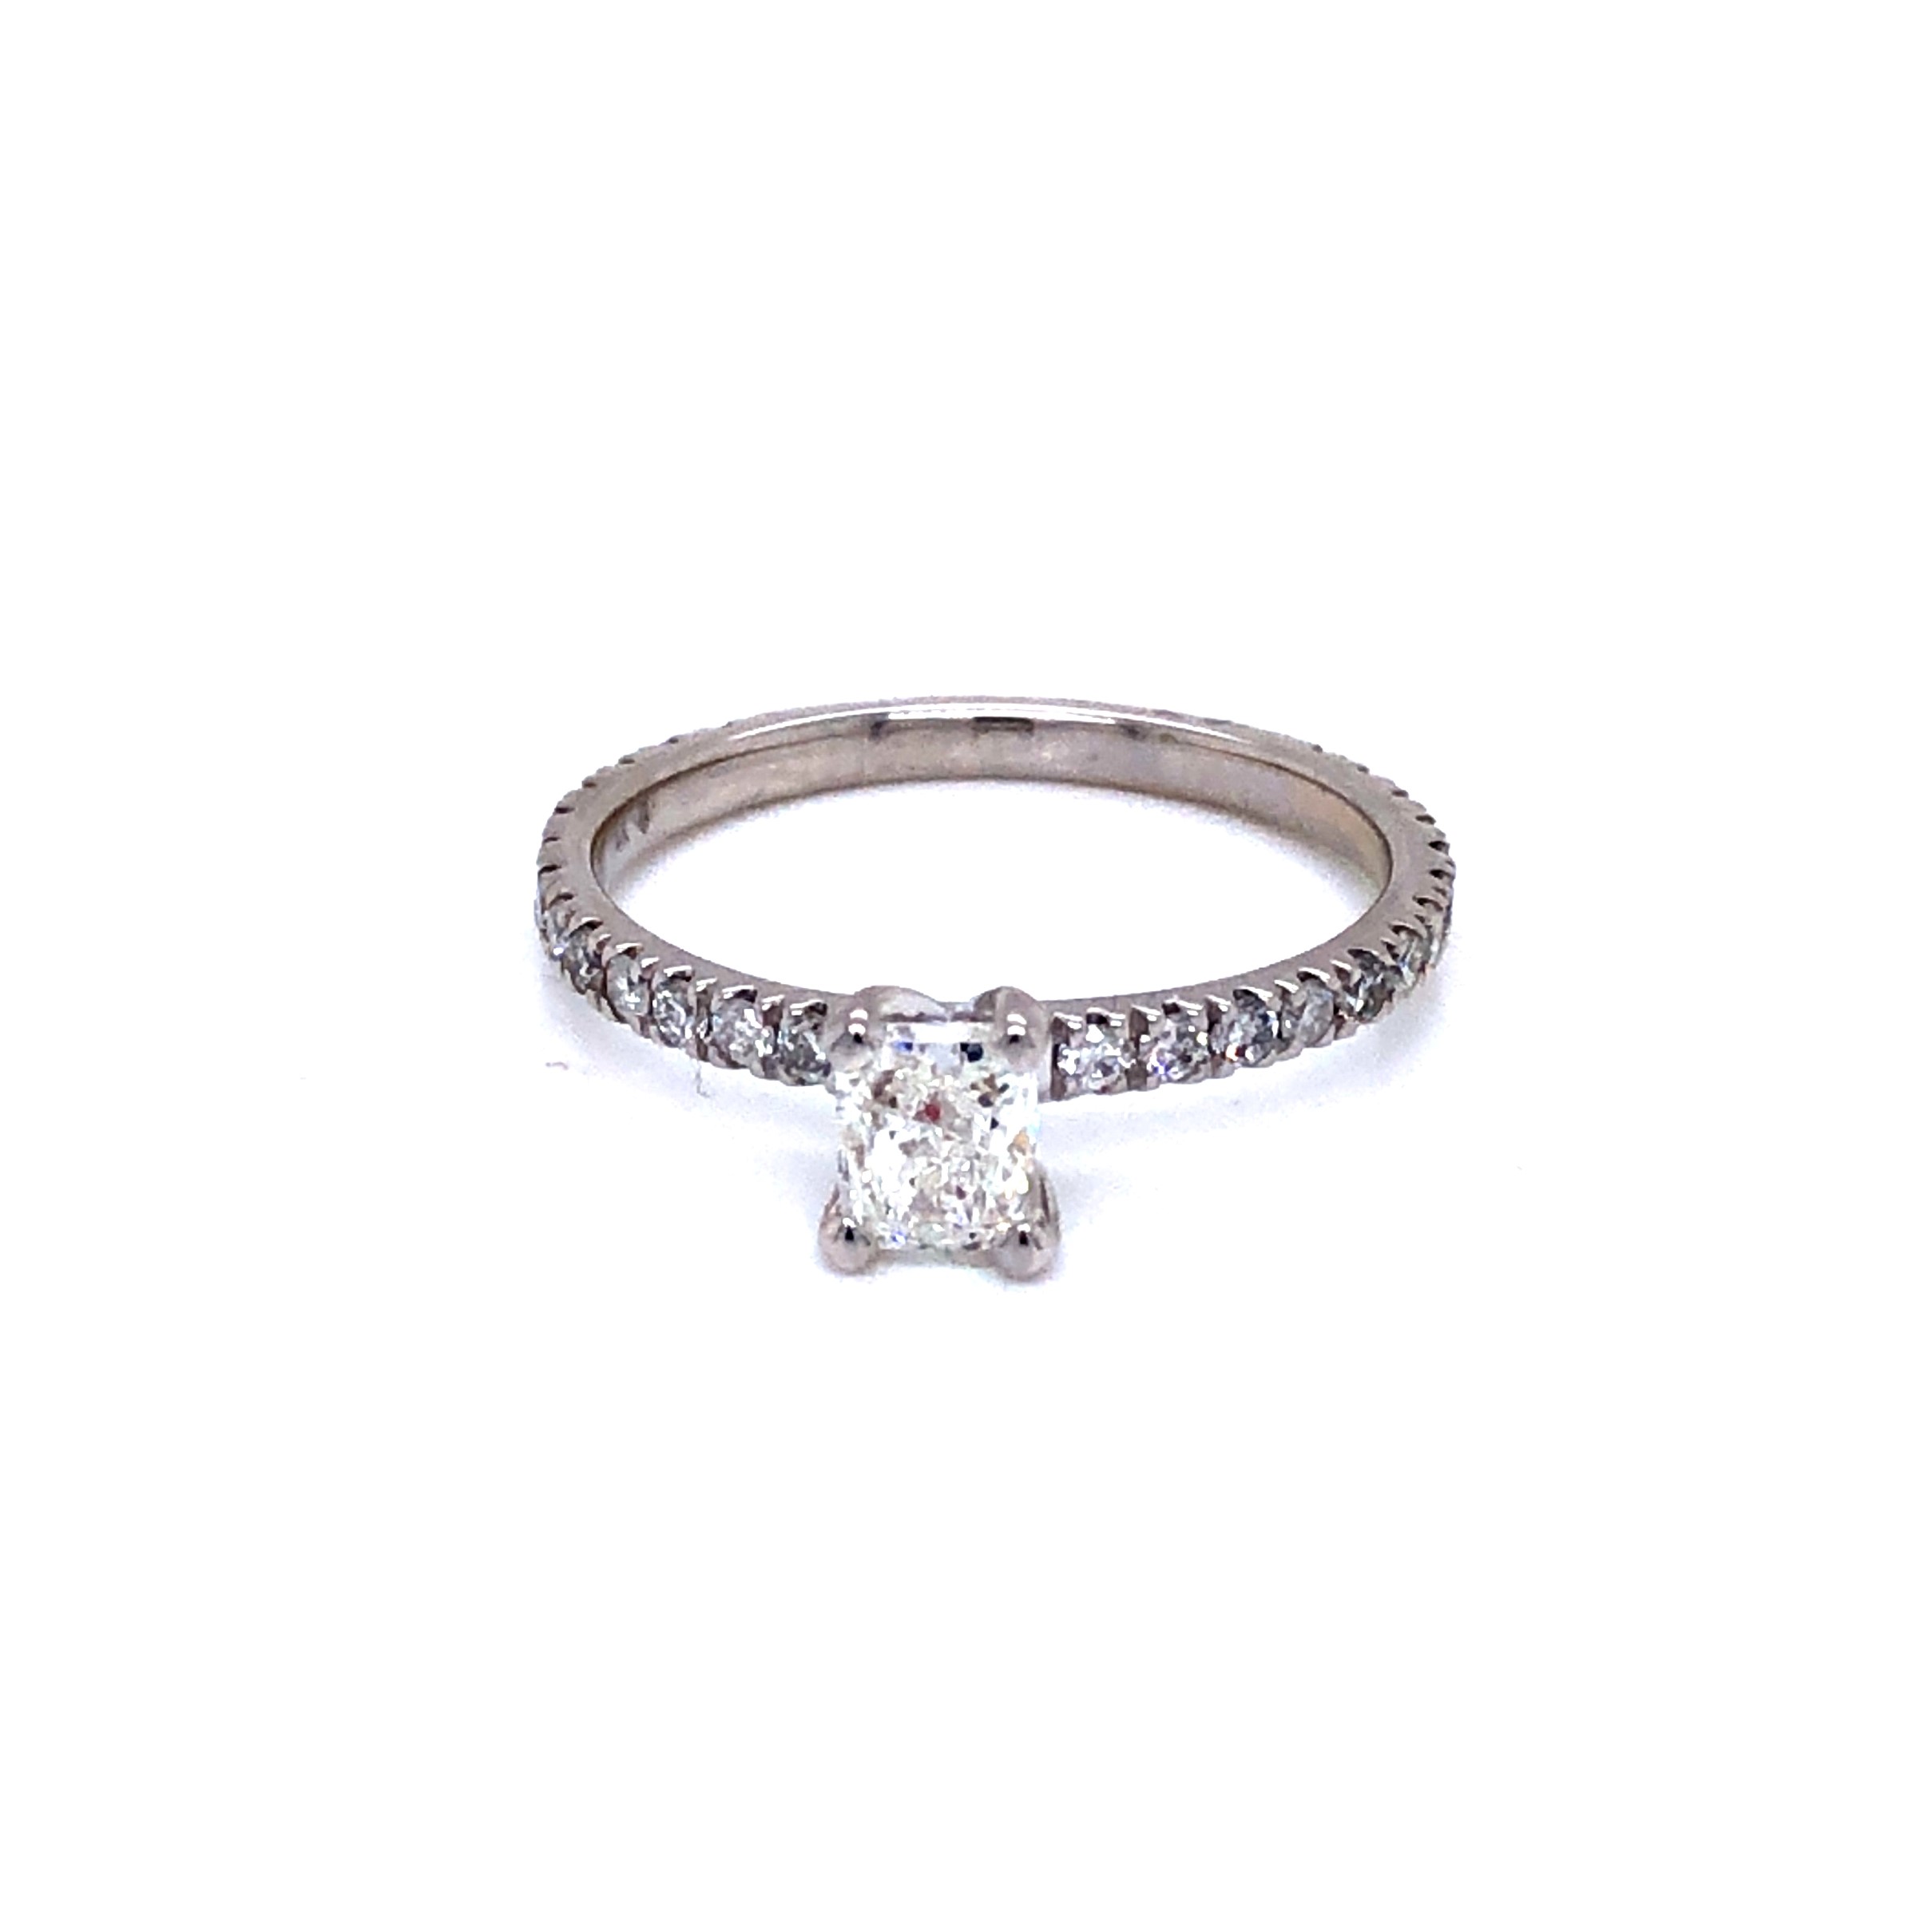 Ladies White 14 Karat Engagement Ring Size 6.5 With One 0.50Ct Radiant F VS1 Diamond And 26=0.37Tw Round Brilliant F VS1 Diamonds  dwt: 1.2